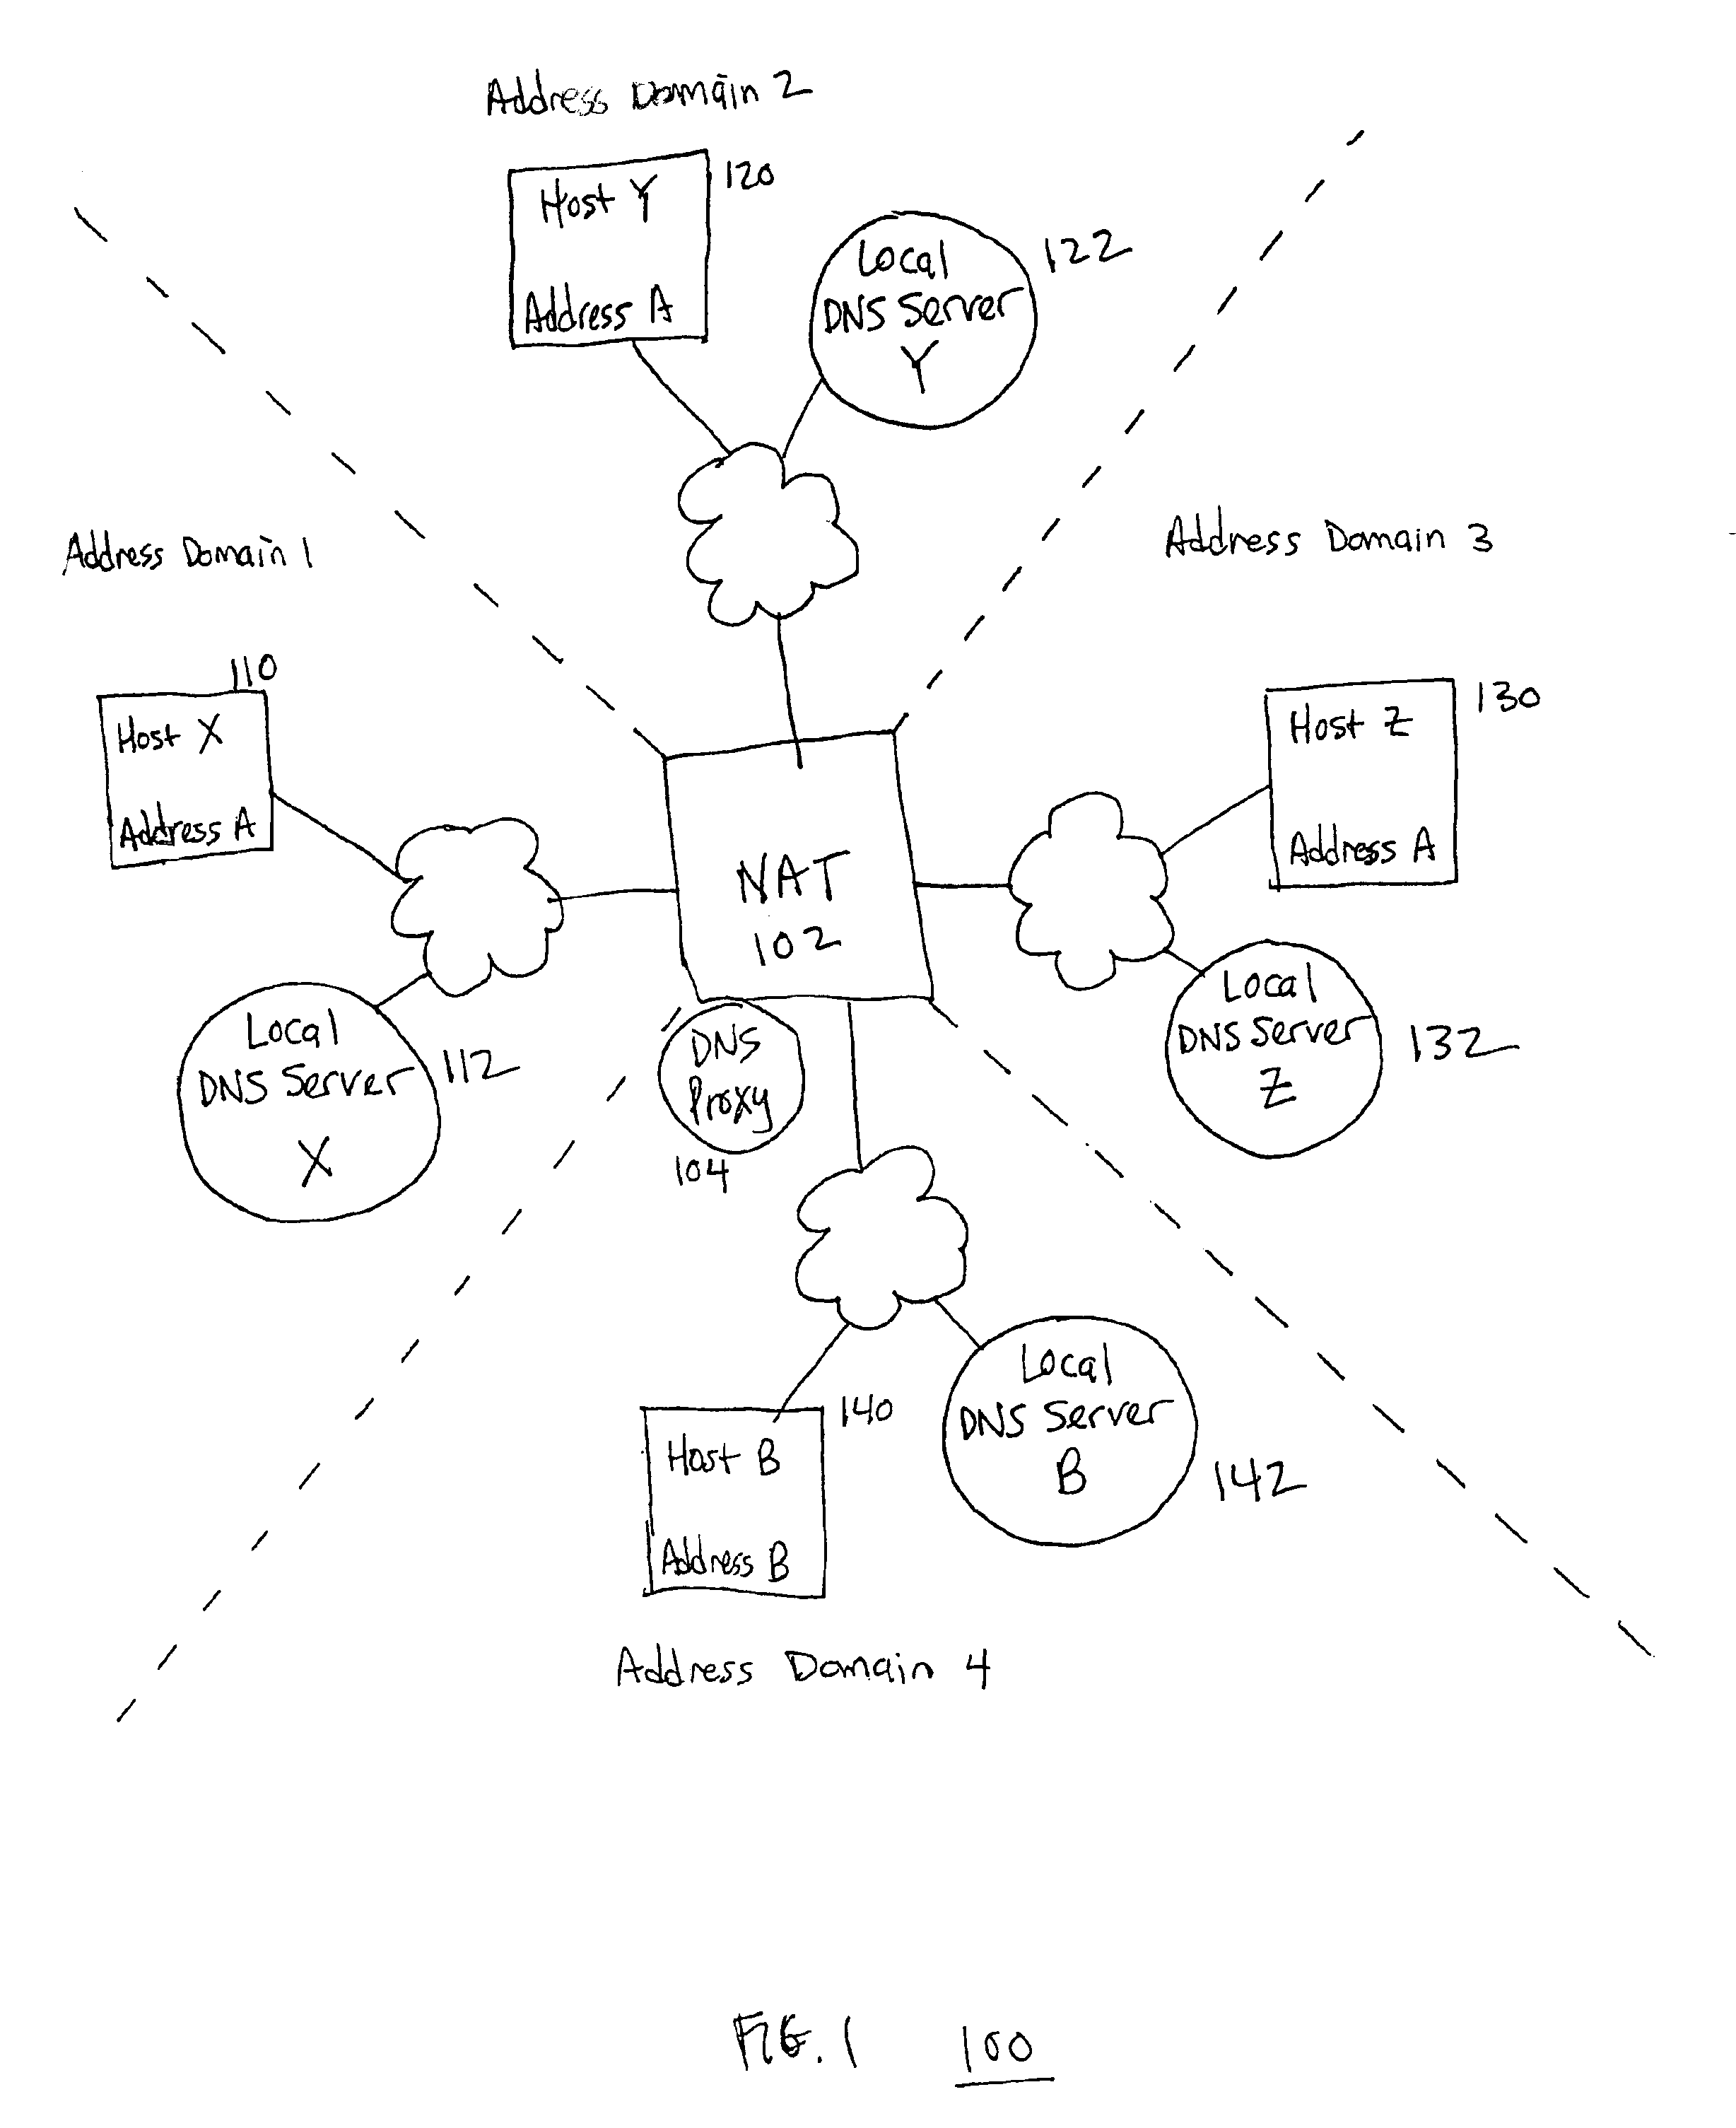 Network address translation in a network having multiple overlapping address domains